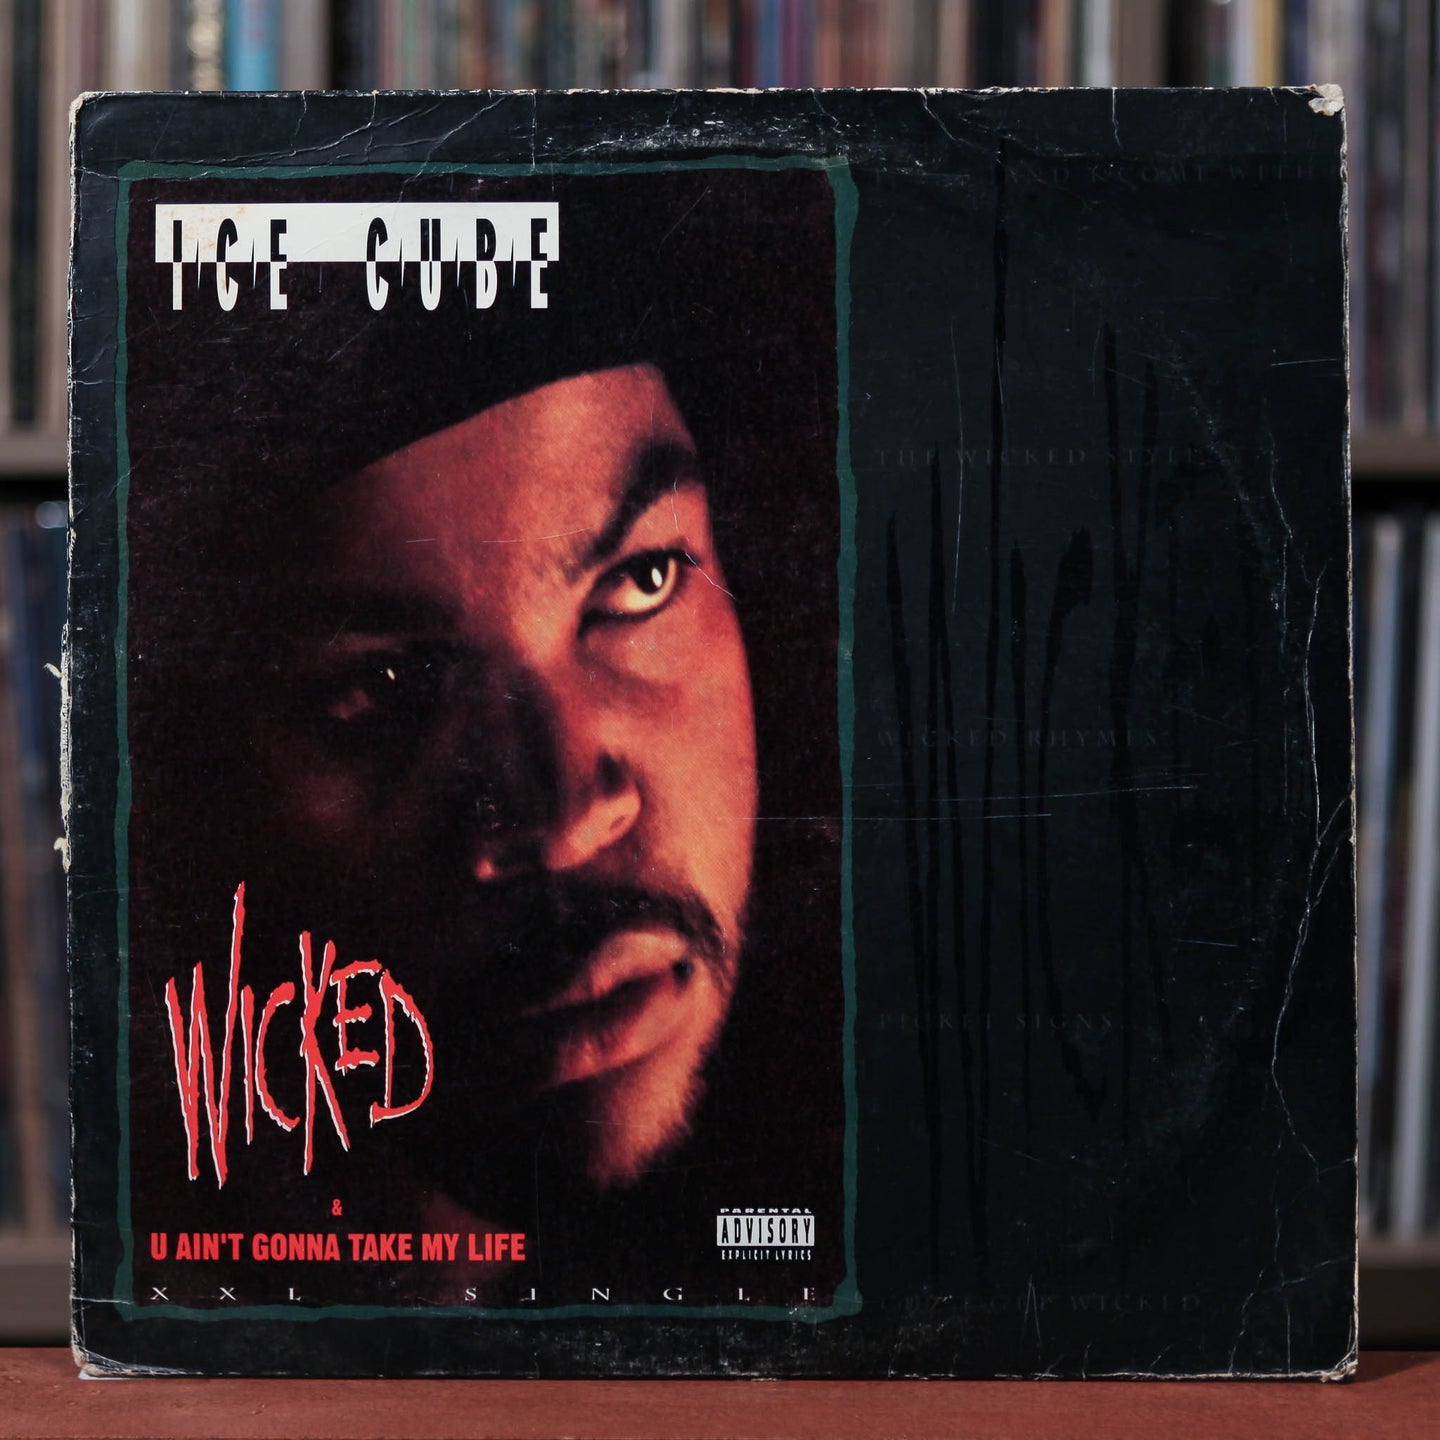 Ice Cube - Wicked / U Ain't Gonna Take My Life - 12